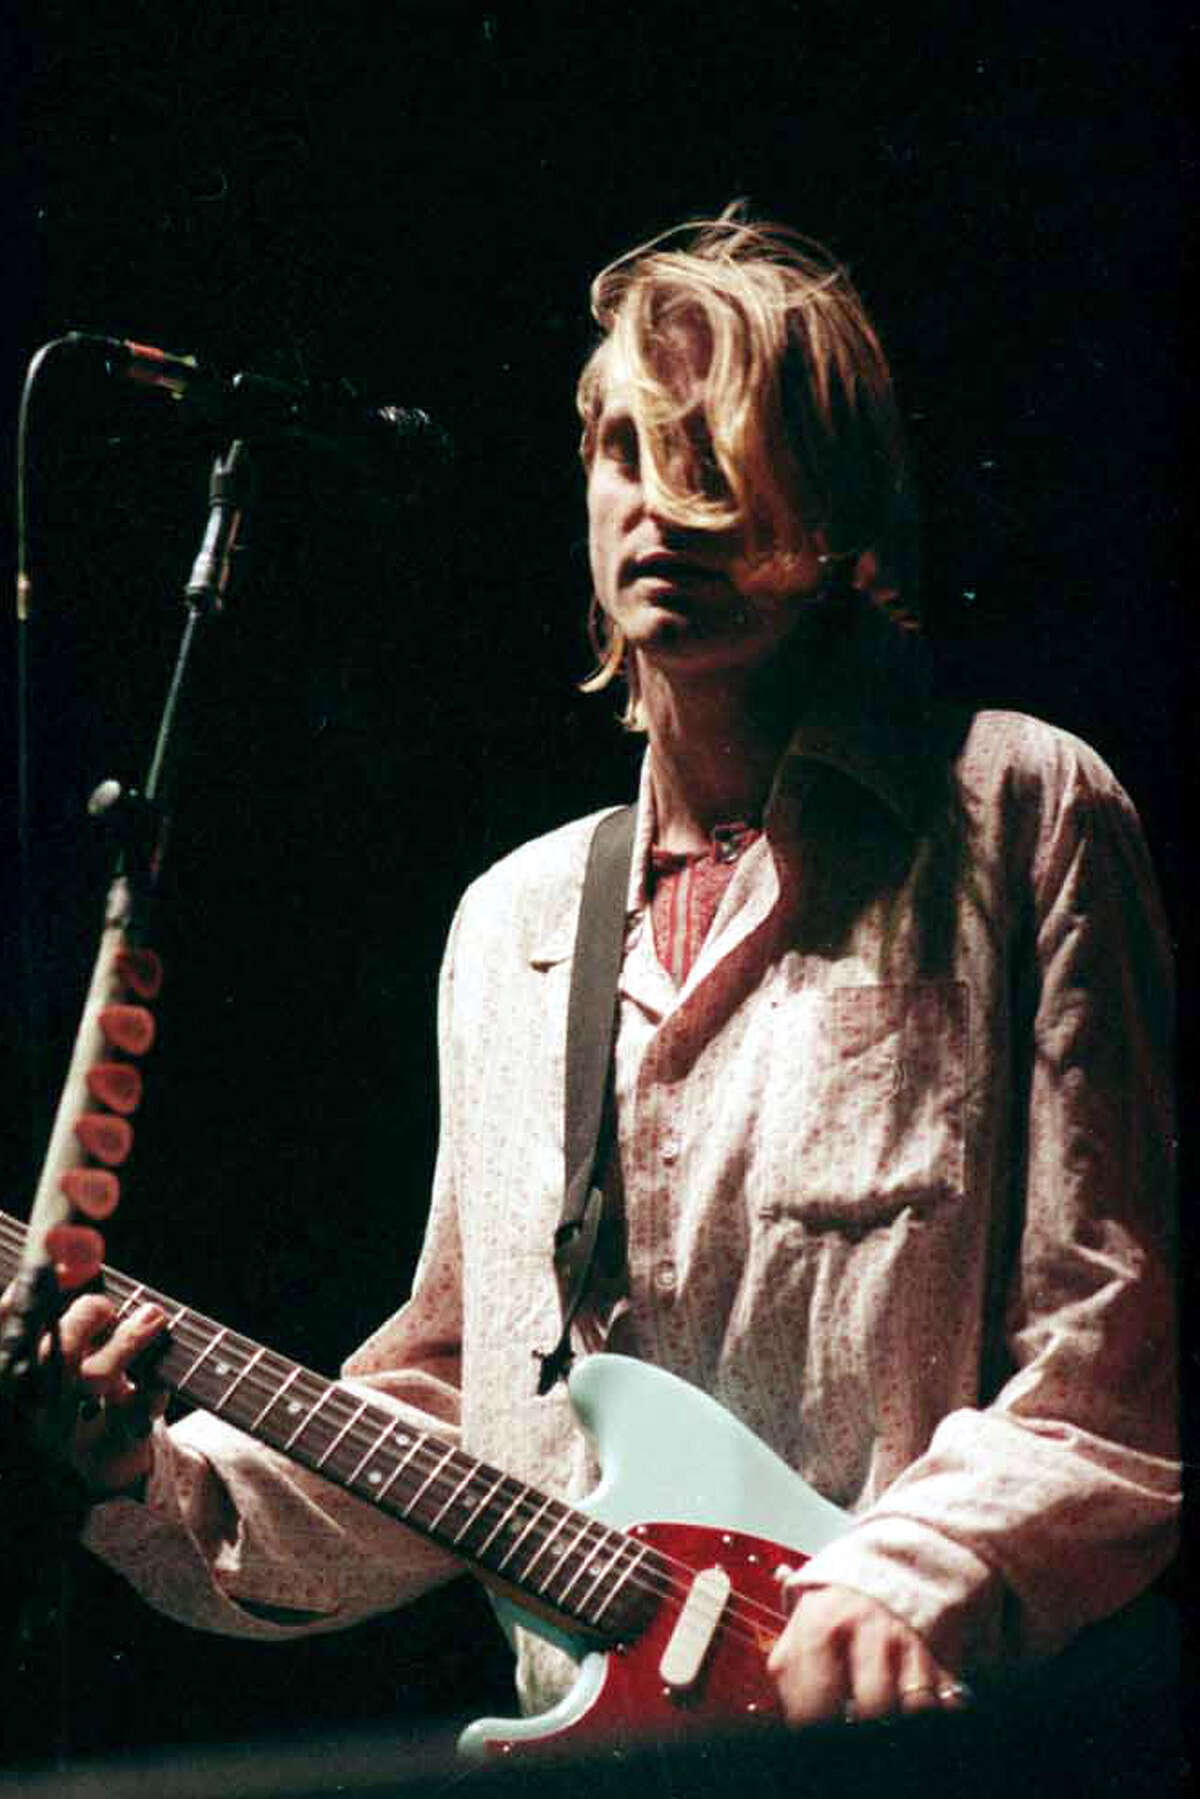 Kurt Cobain suicide scene: Previously unpublished photos